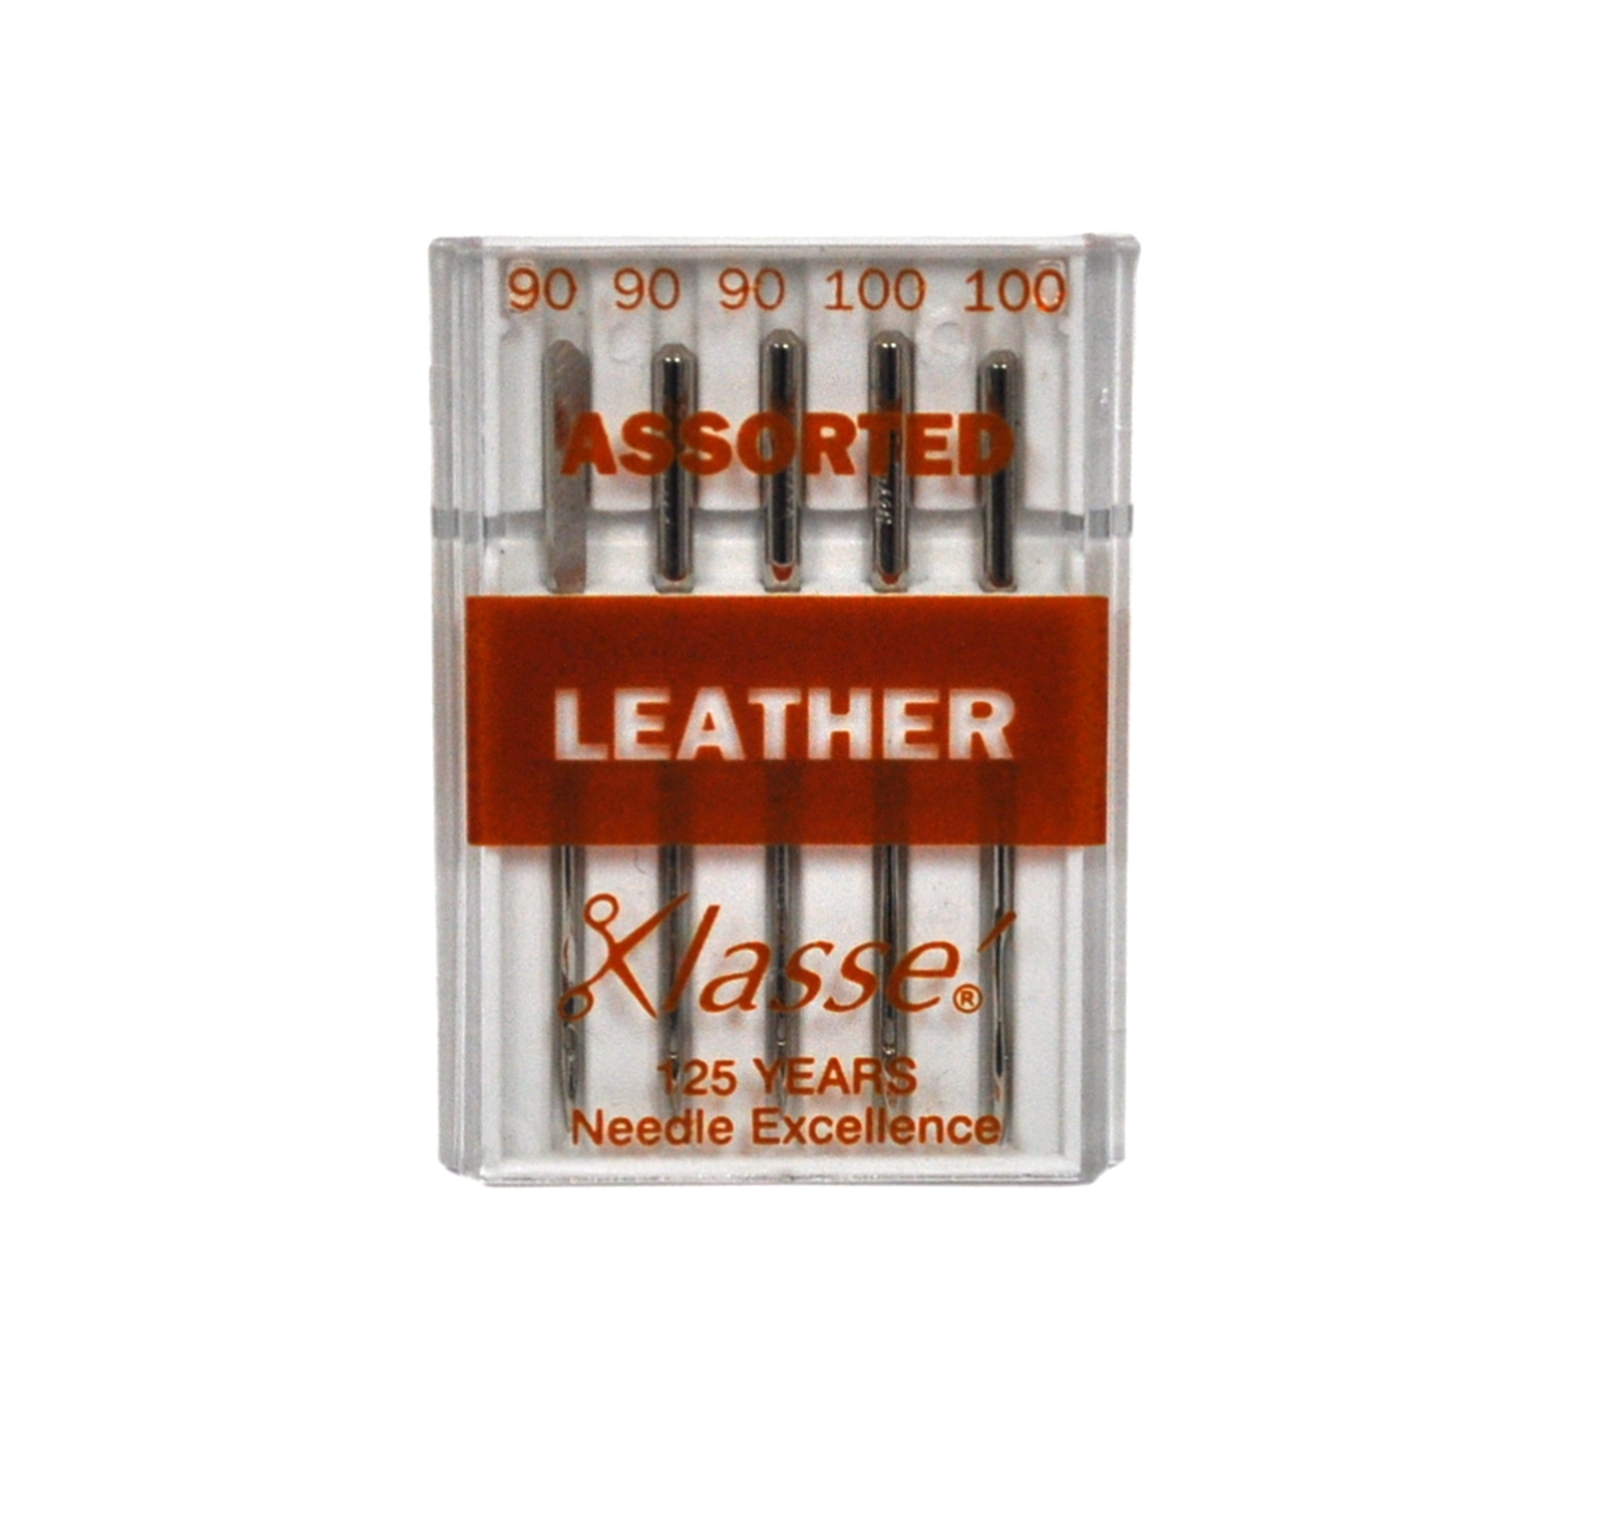 Klasse Assorted Leather Machine Needles